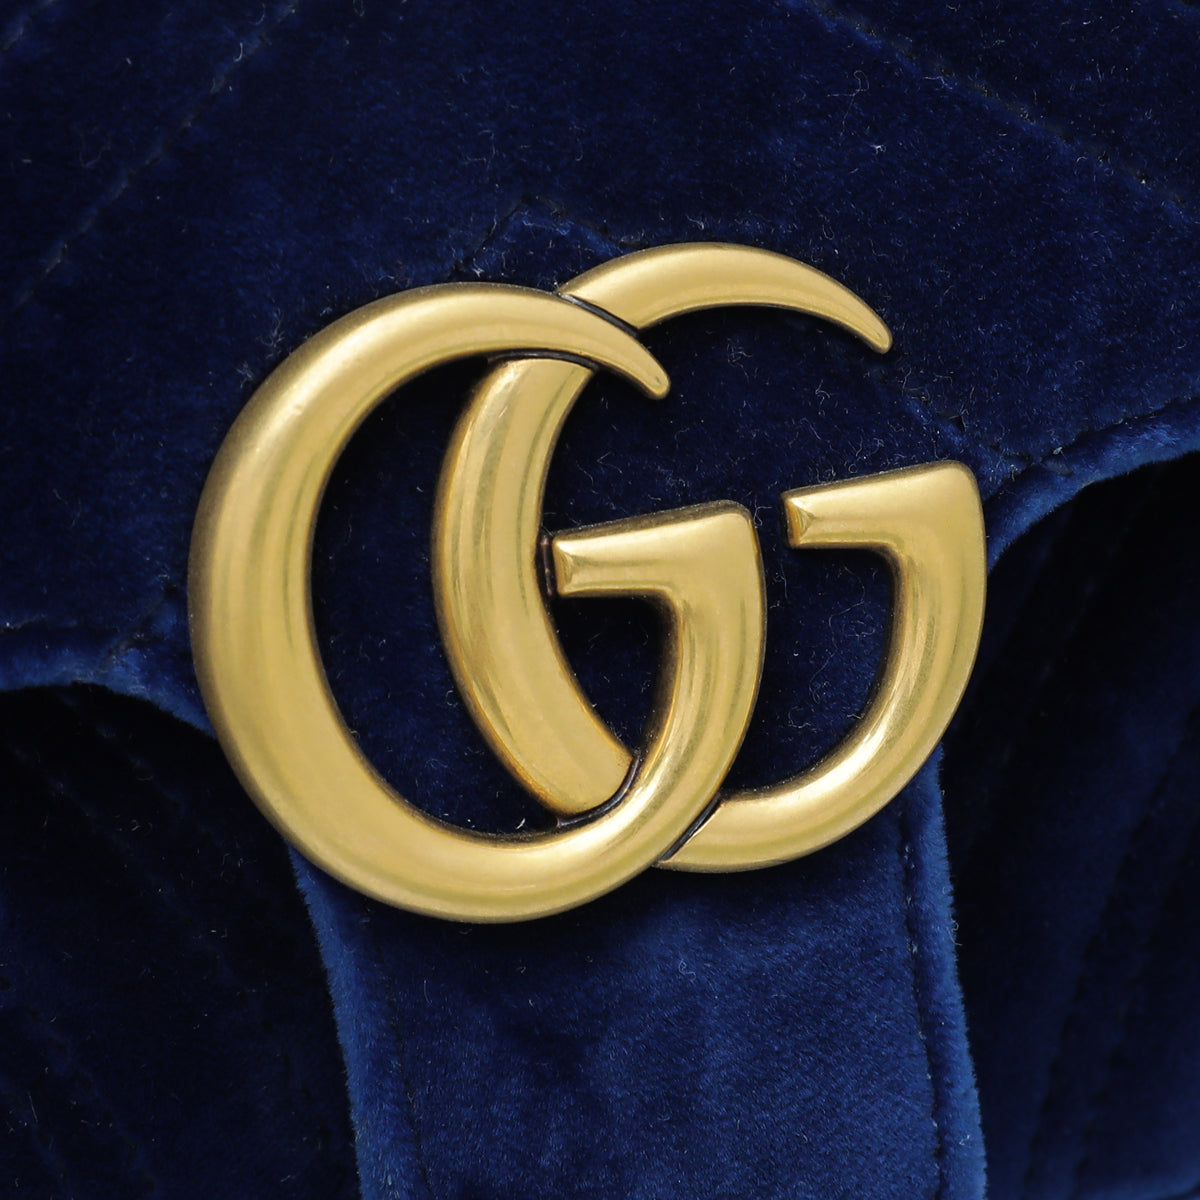 Gucci Blue GG Velvet Marmont Mini Shoulder Bag